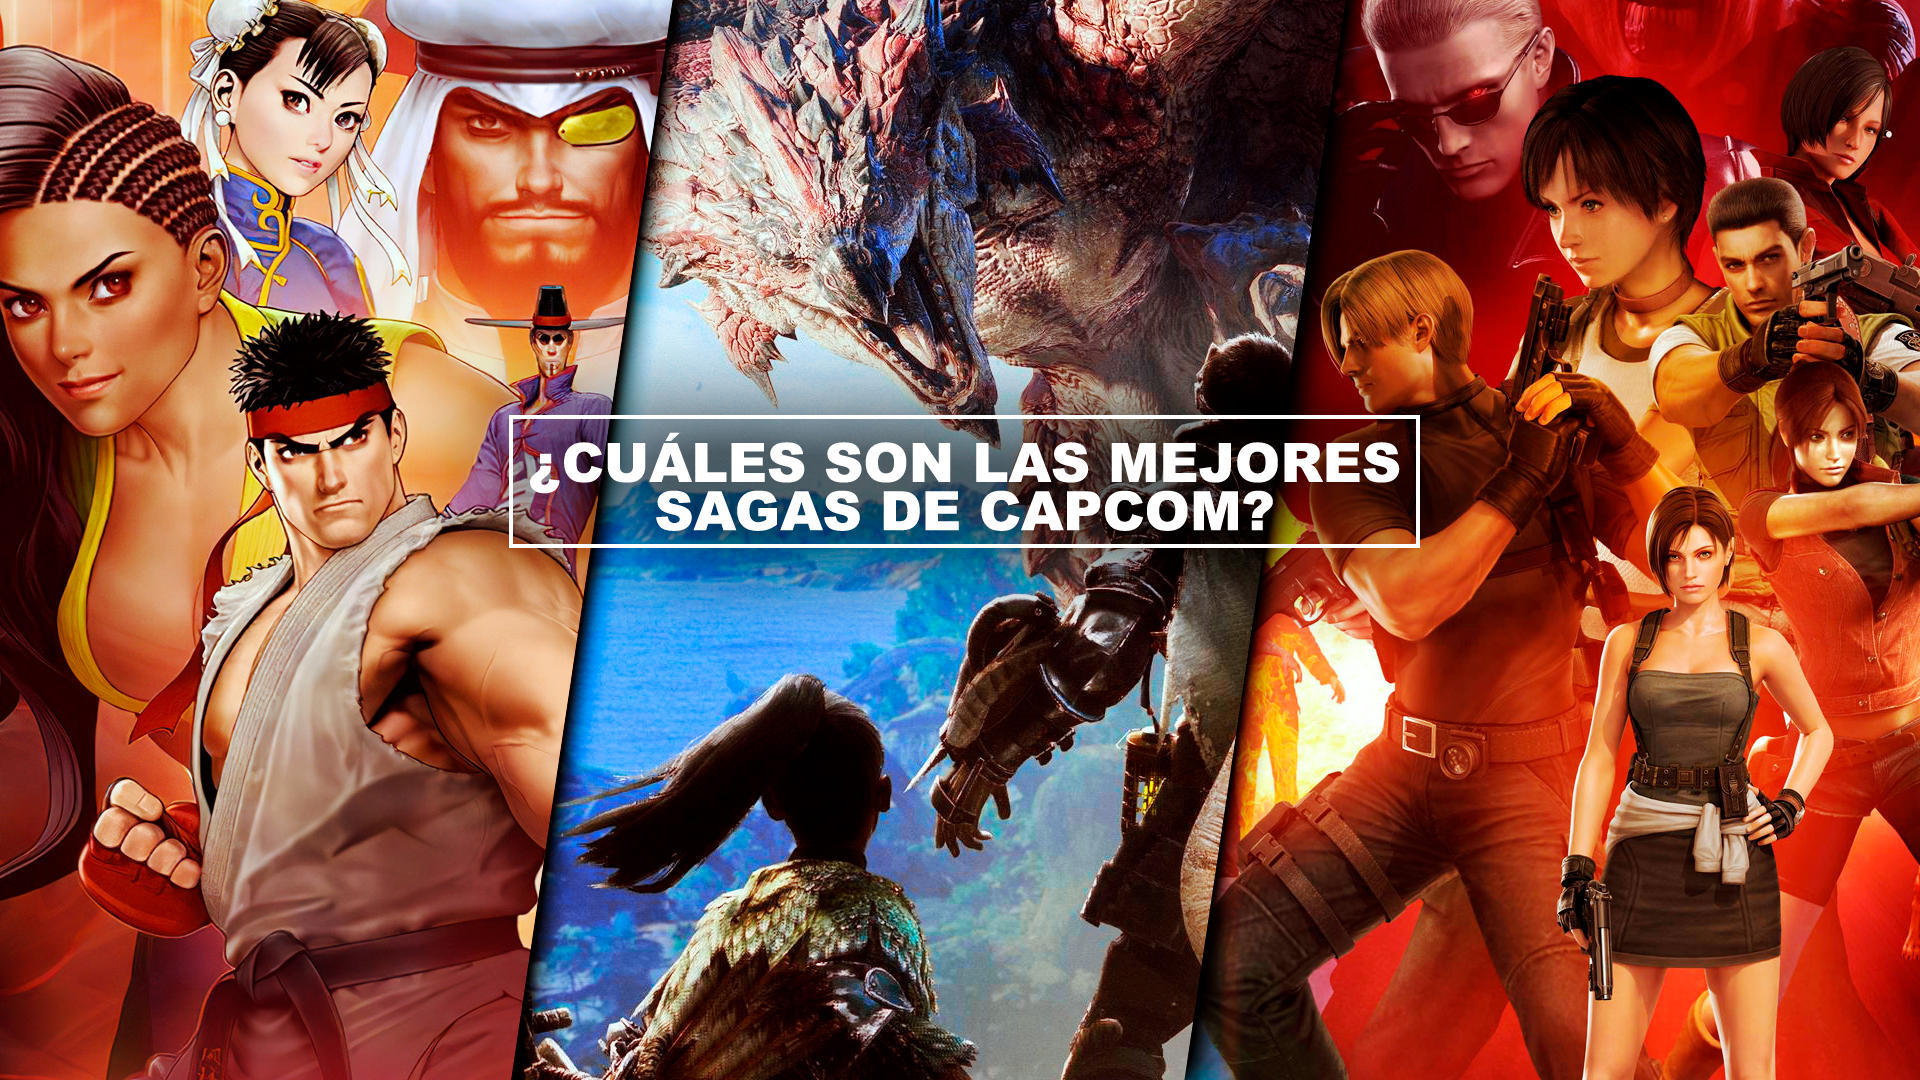 Cules son las mejores sagas de Capcom? - TOP 10